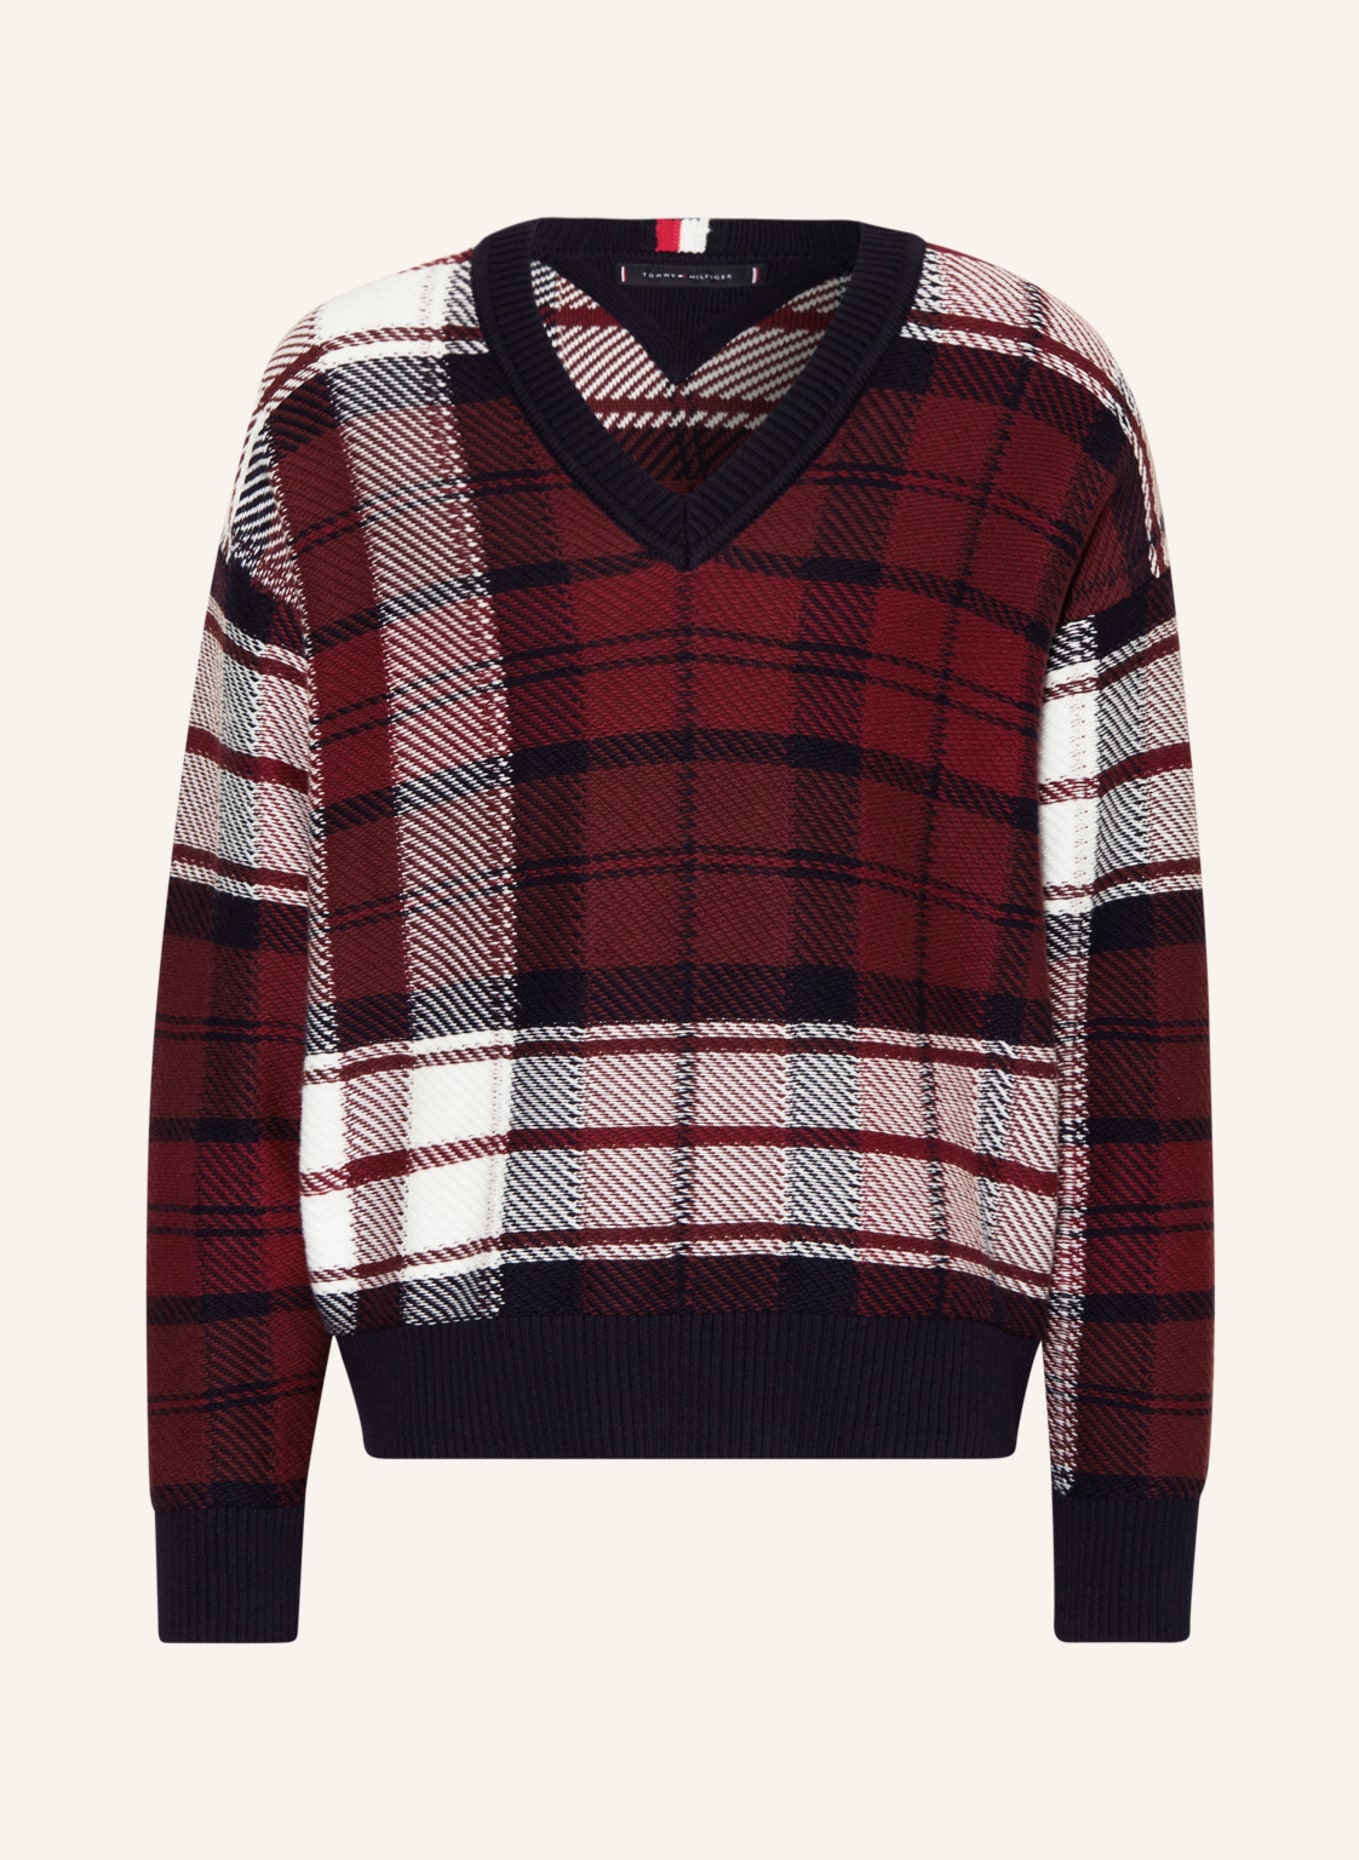 TOMMY HILFIGER Pullover, Farbe: DUNKELBLAU/ DUNKELROT/ WEISS (Bild 1)